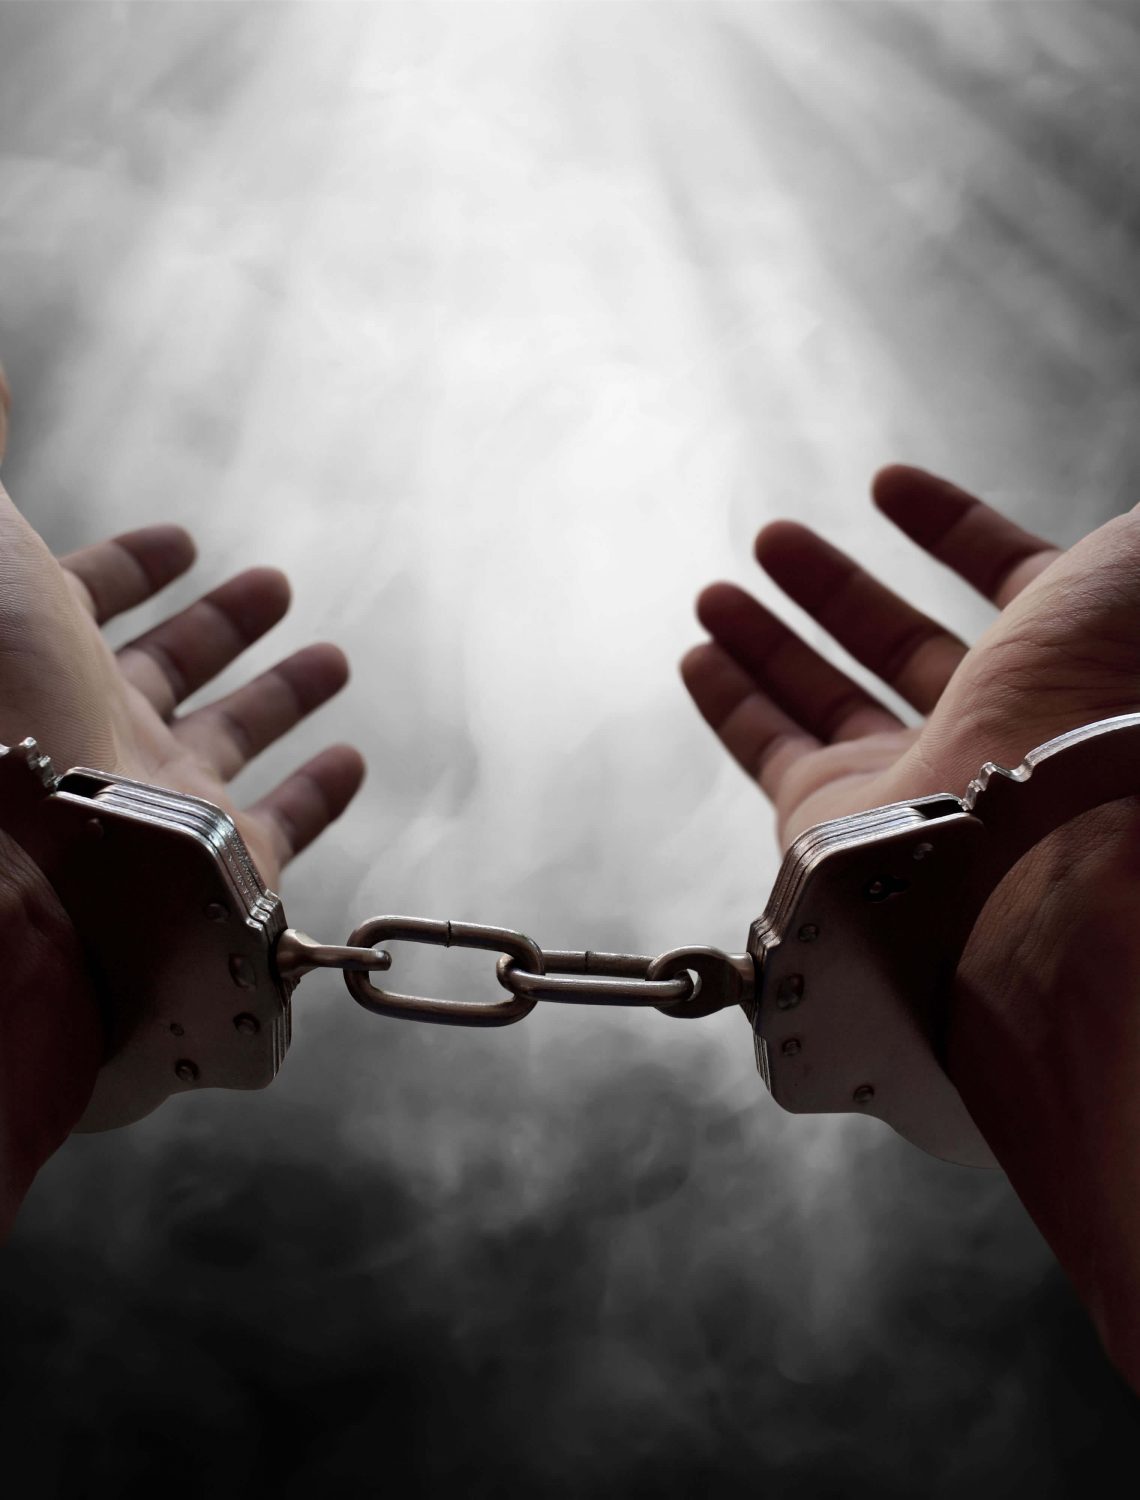 Hands of prisoner in handcuffs